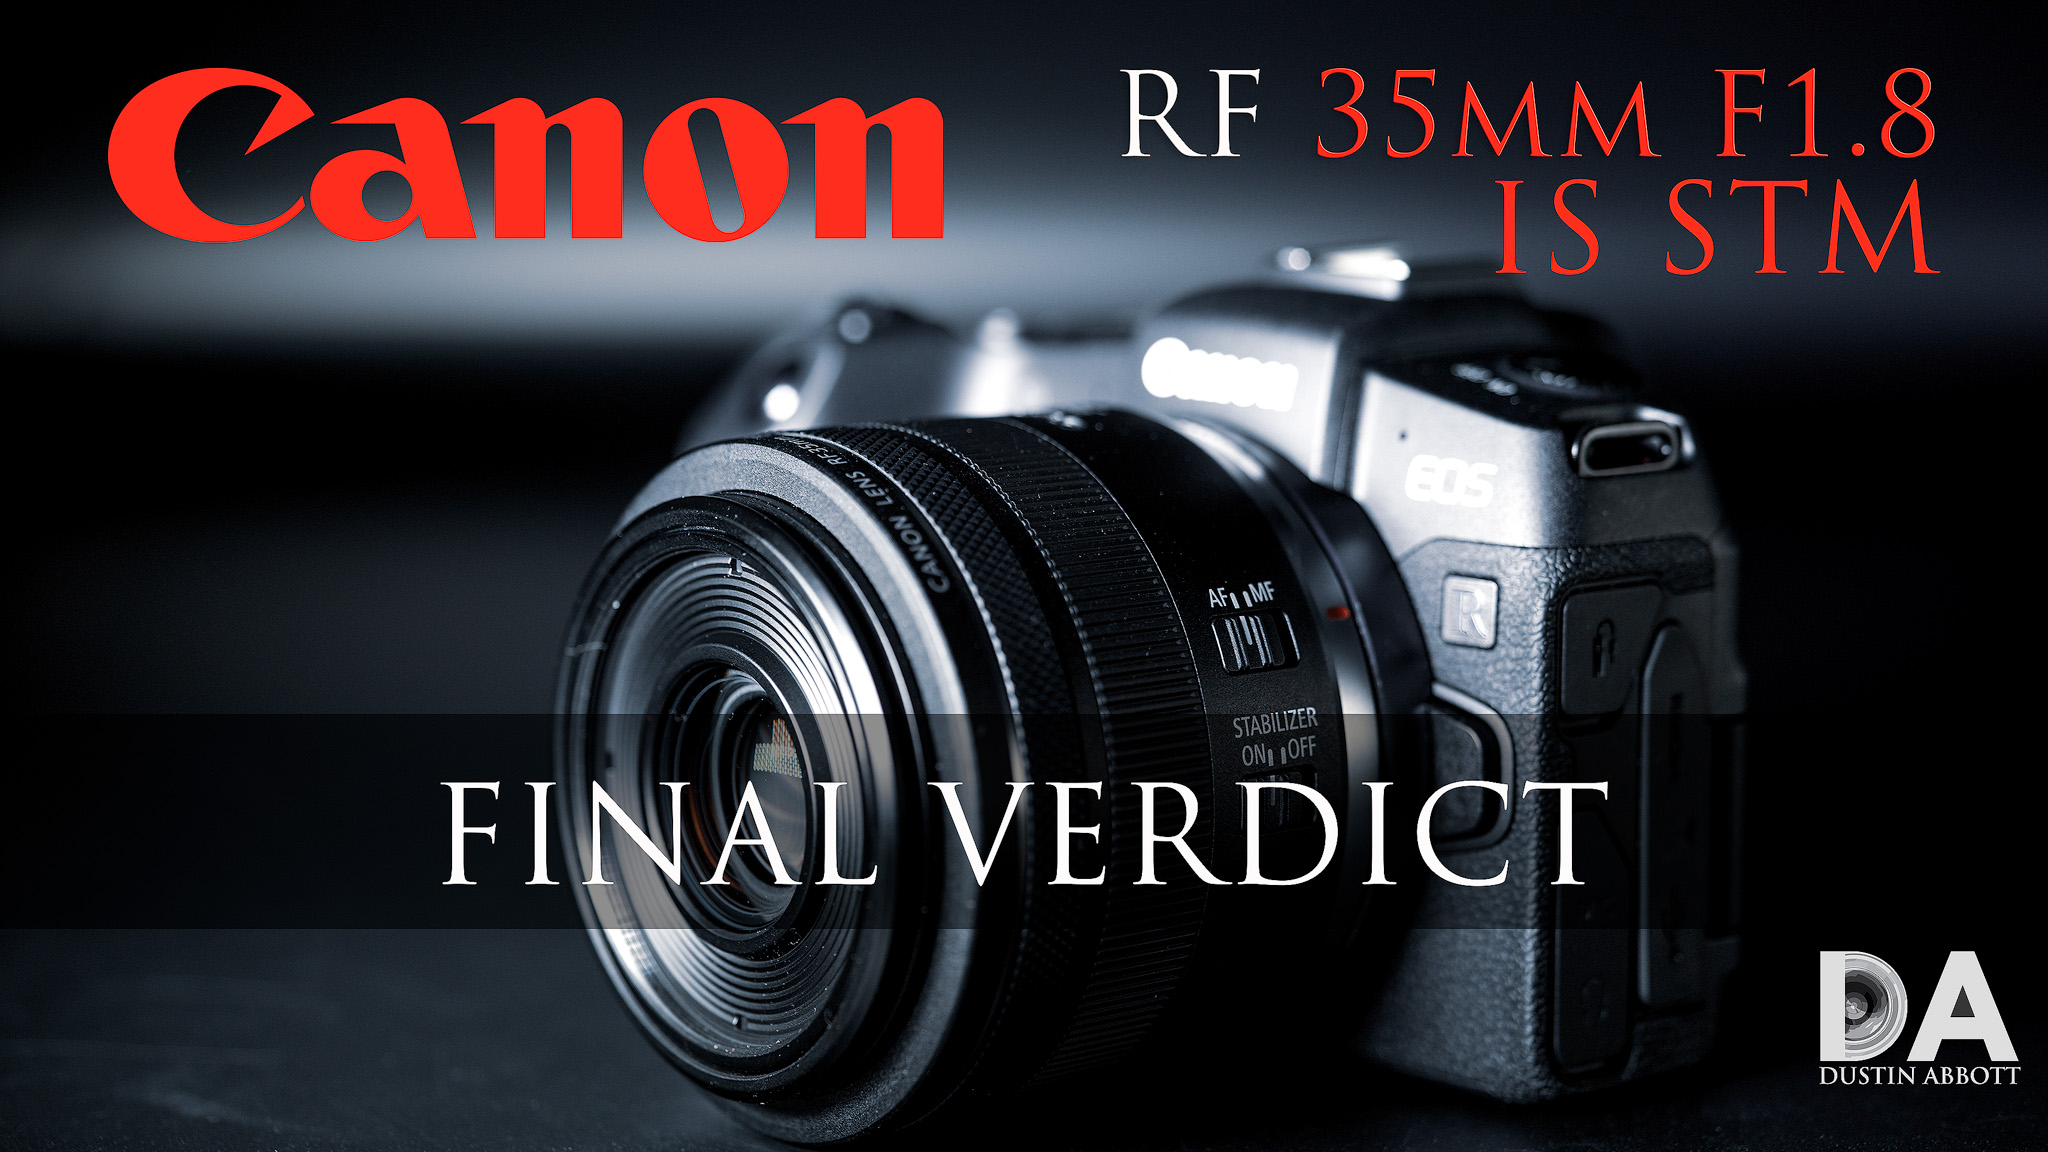 Canon RF 35mm F1.8 Macro IS STM Review - DustinAbbott.net